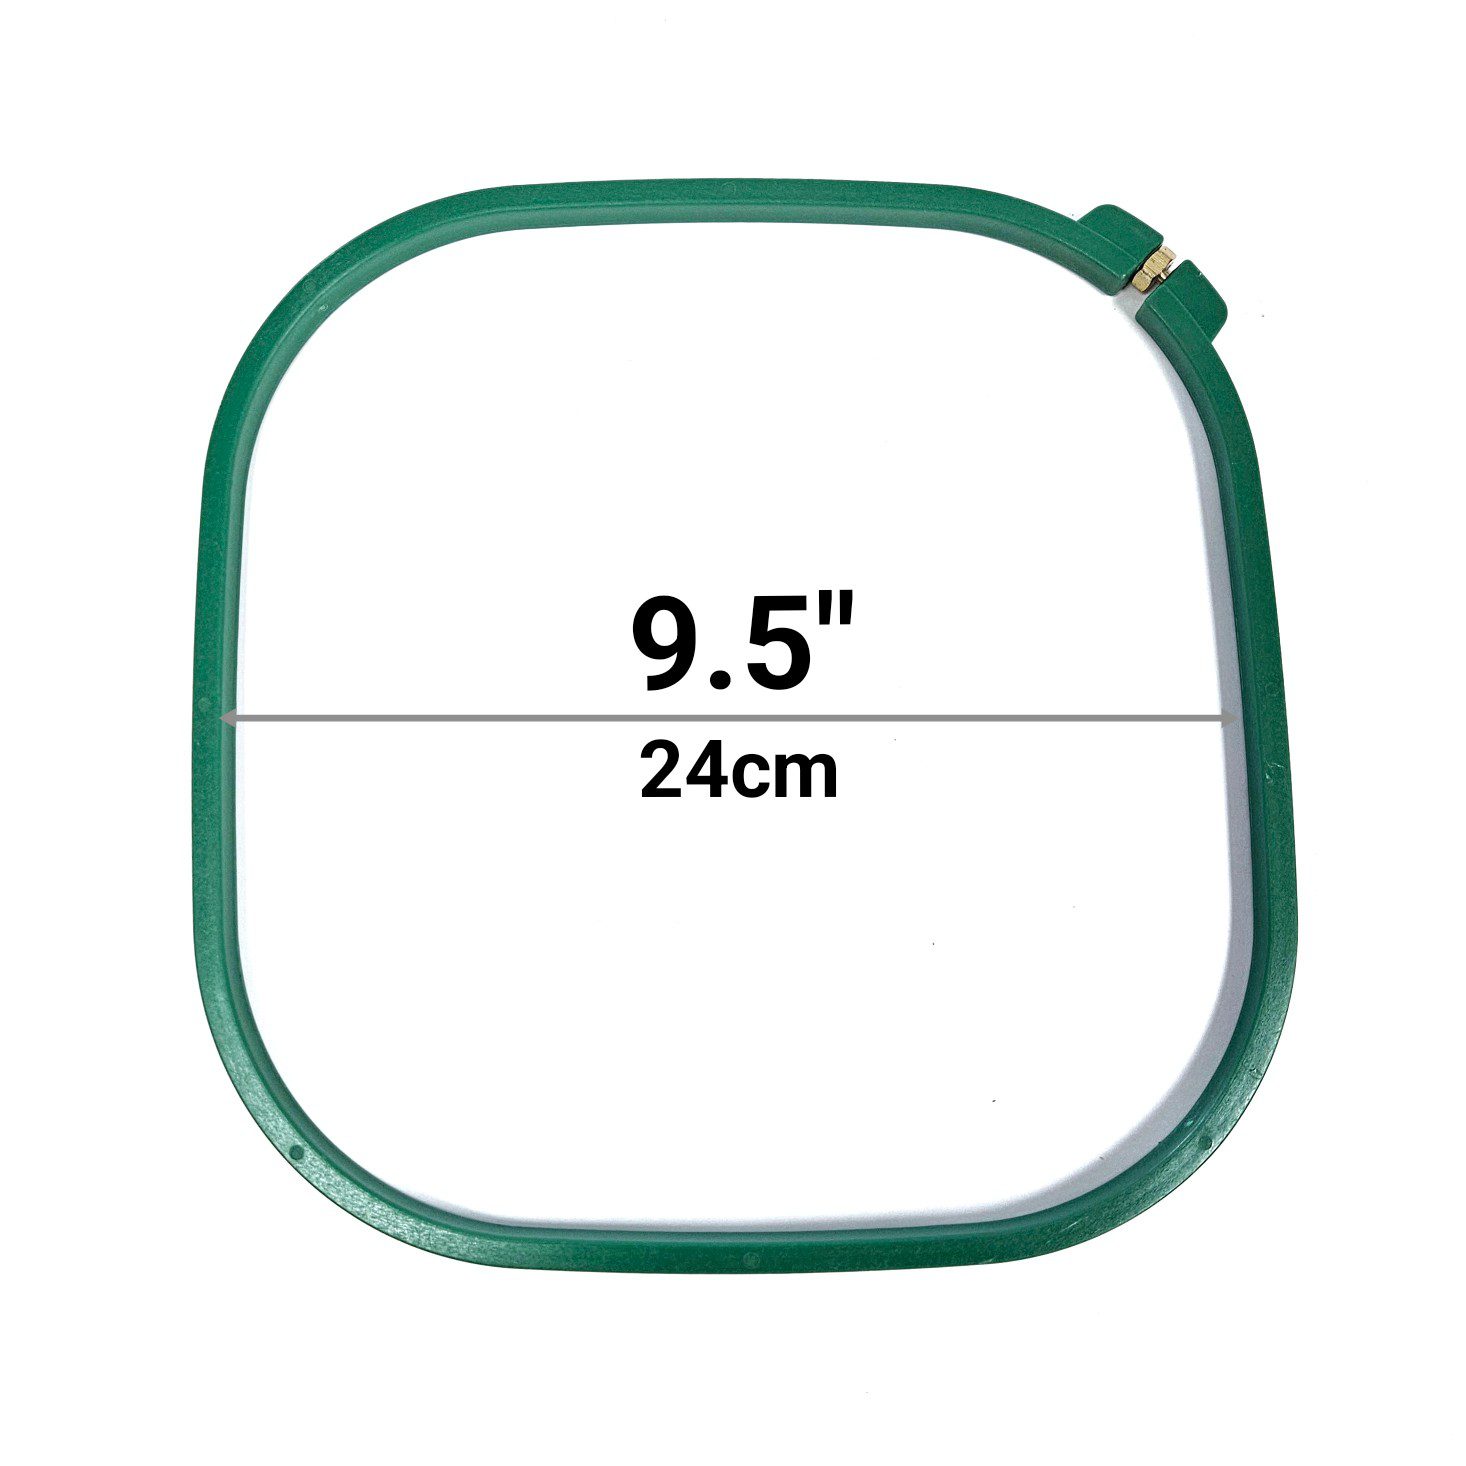 24cm square emb ring